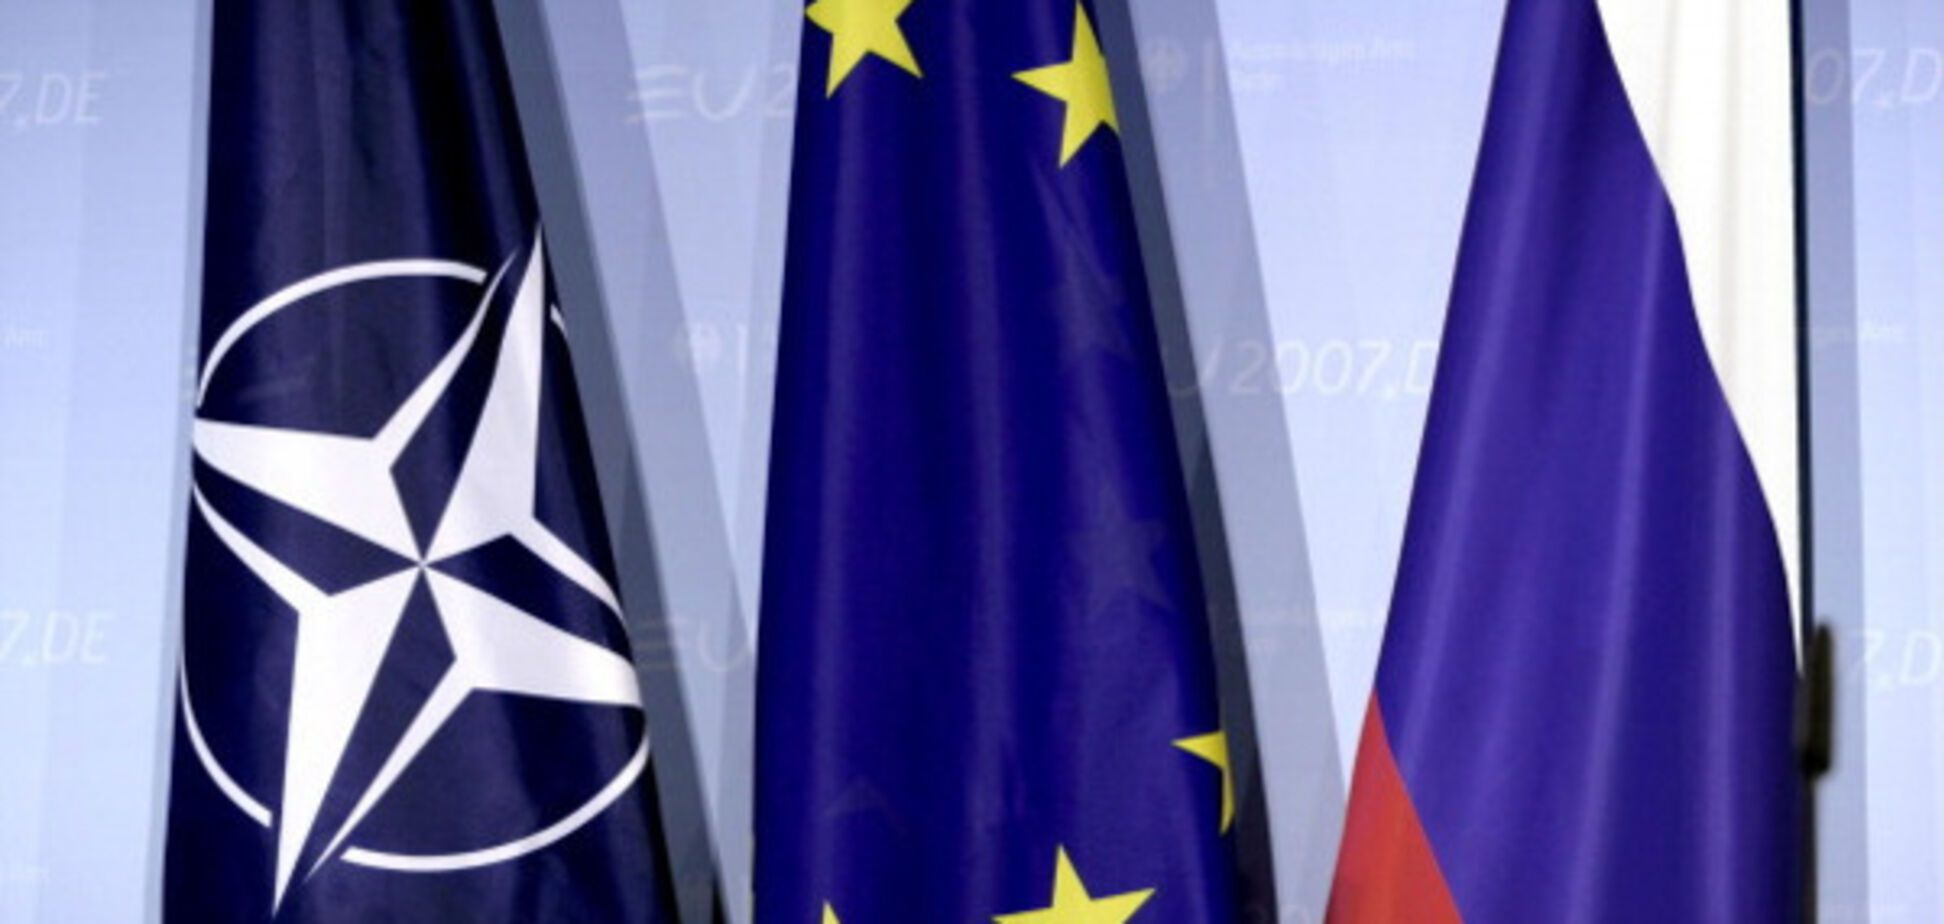 Прапори НАТО, ЄС і РФ